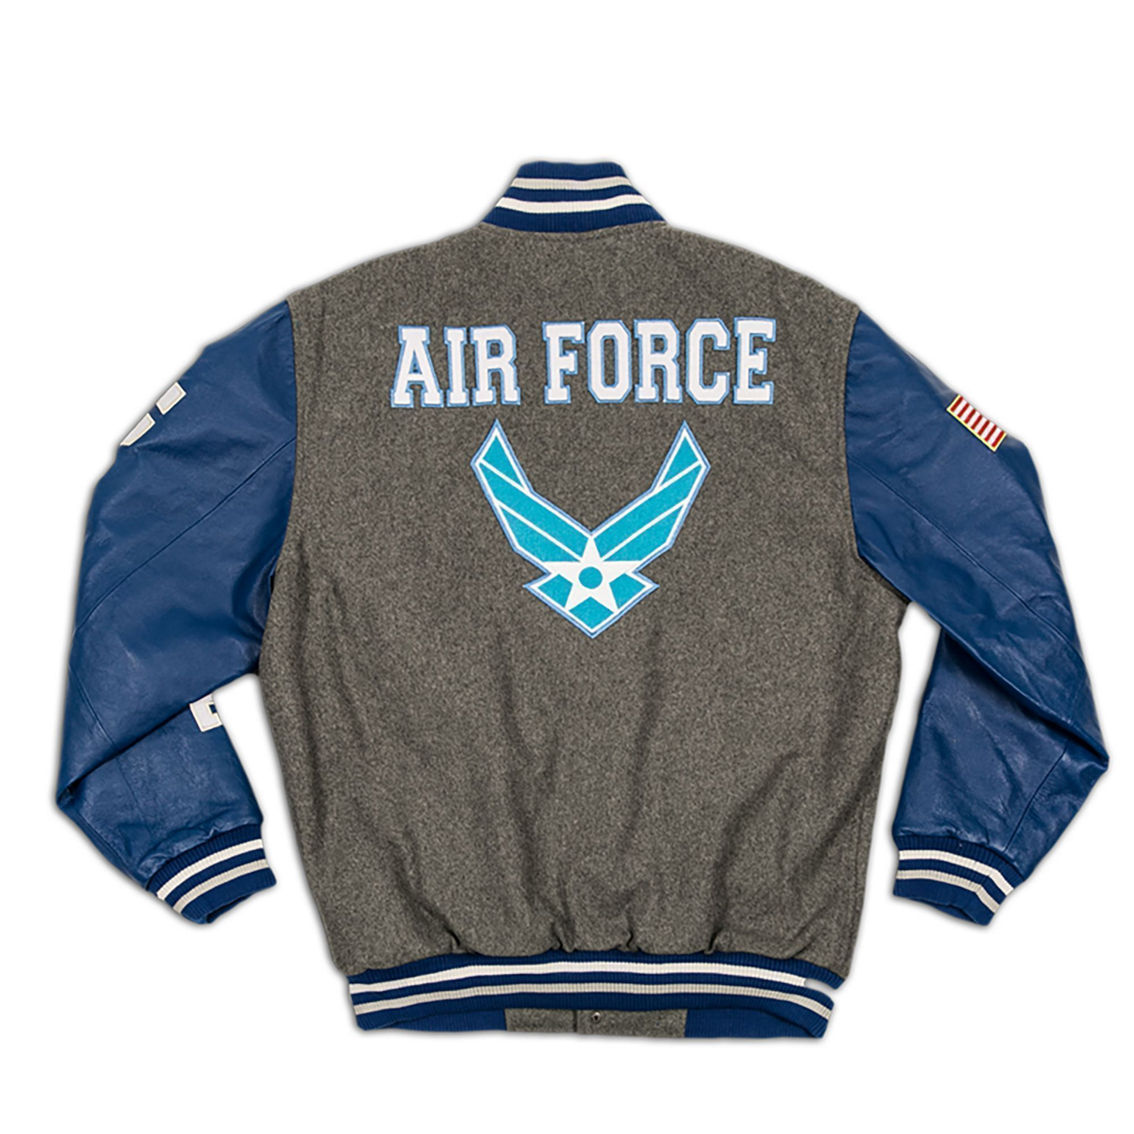 US Air Force Leather Varsity Jacket - Image 2 of 2